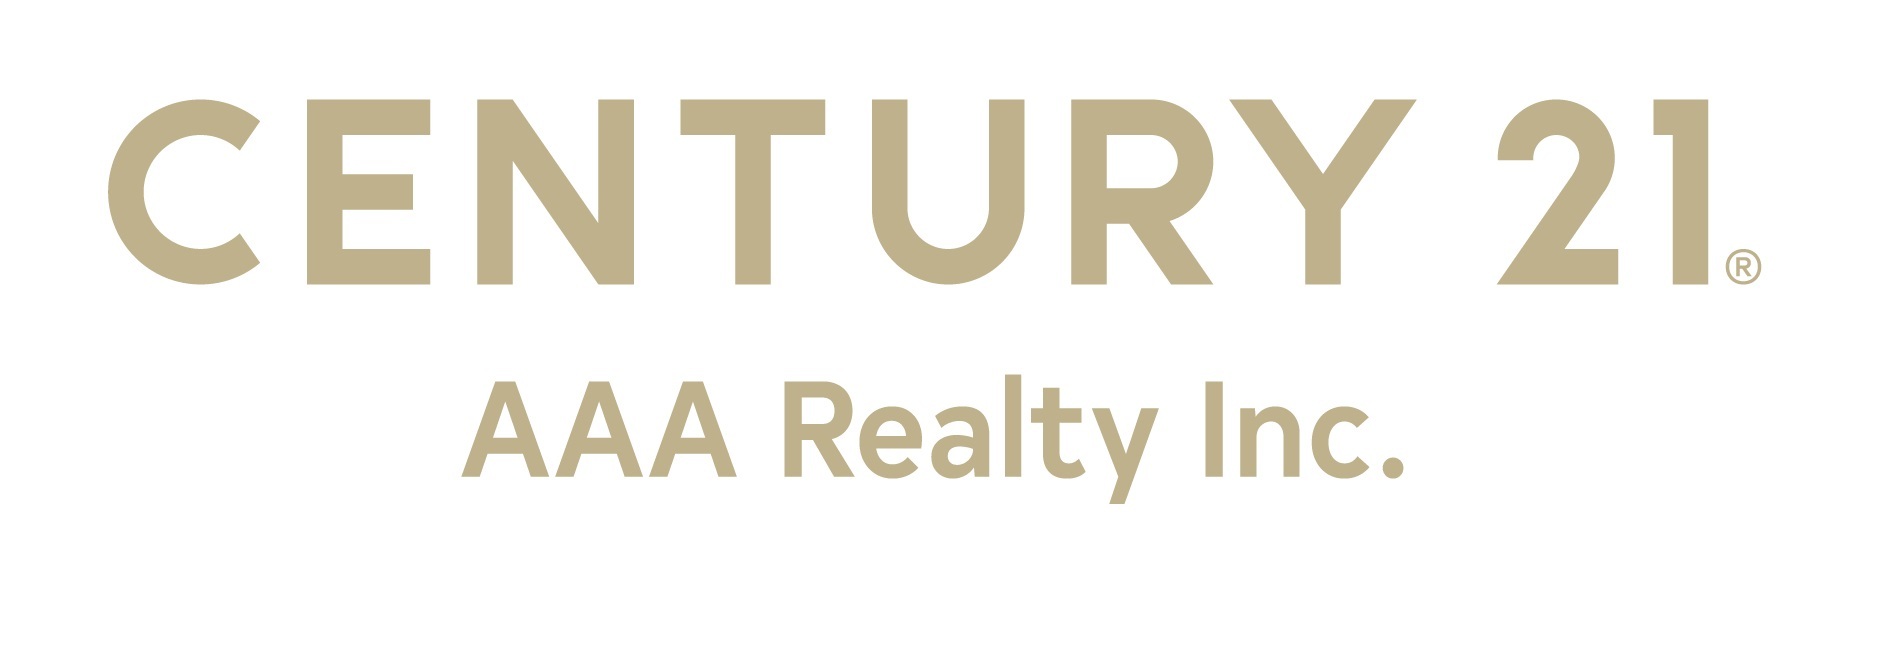 CENTURY 21 AAA Realty Inc.,Surrey,Century 21 Canada